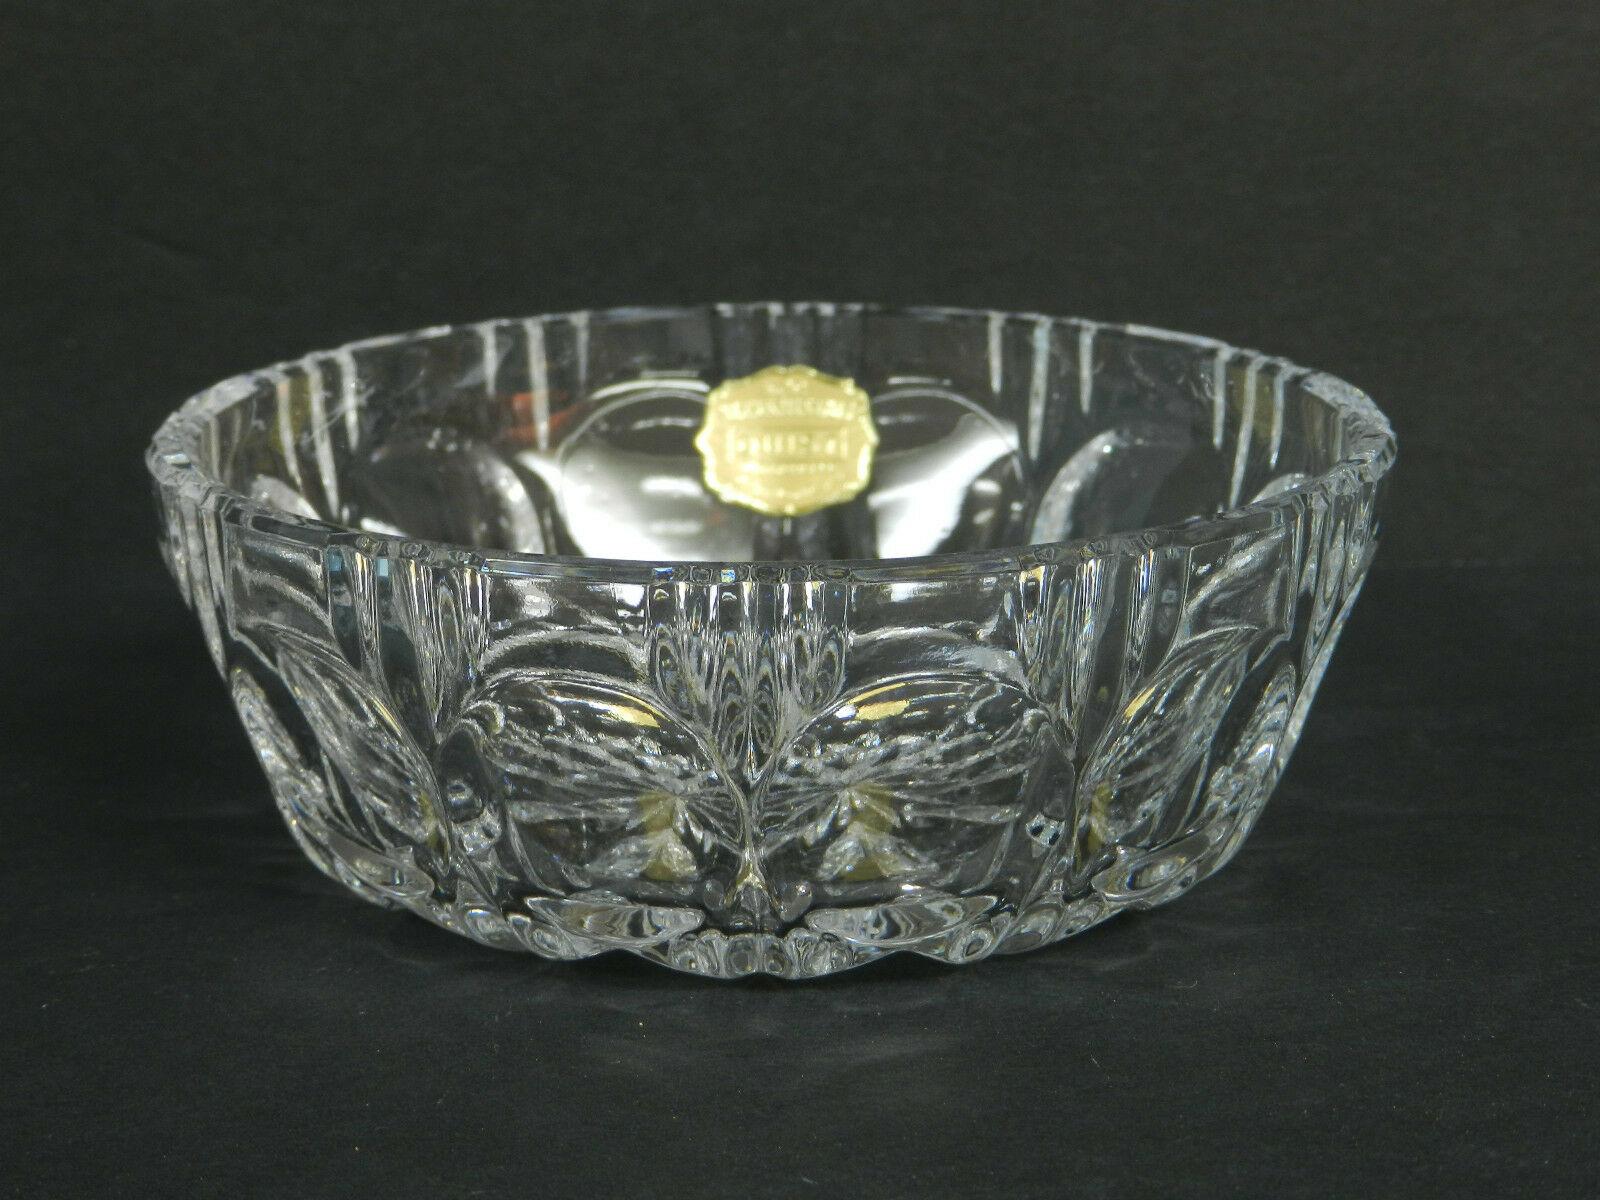 Pristine Echt Bleikristall Quist Worttemberg Crystal Bowl / West Germany Elegant